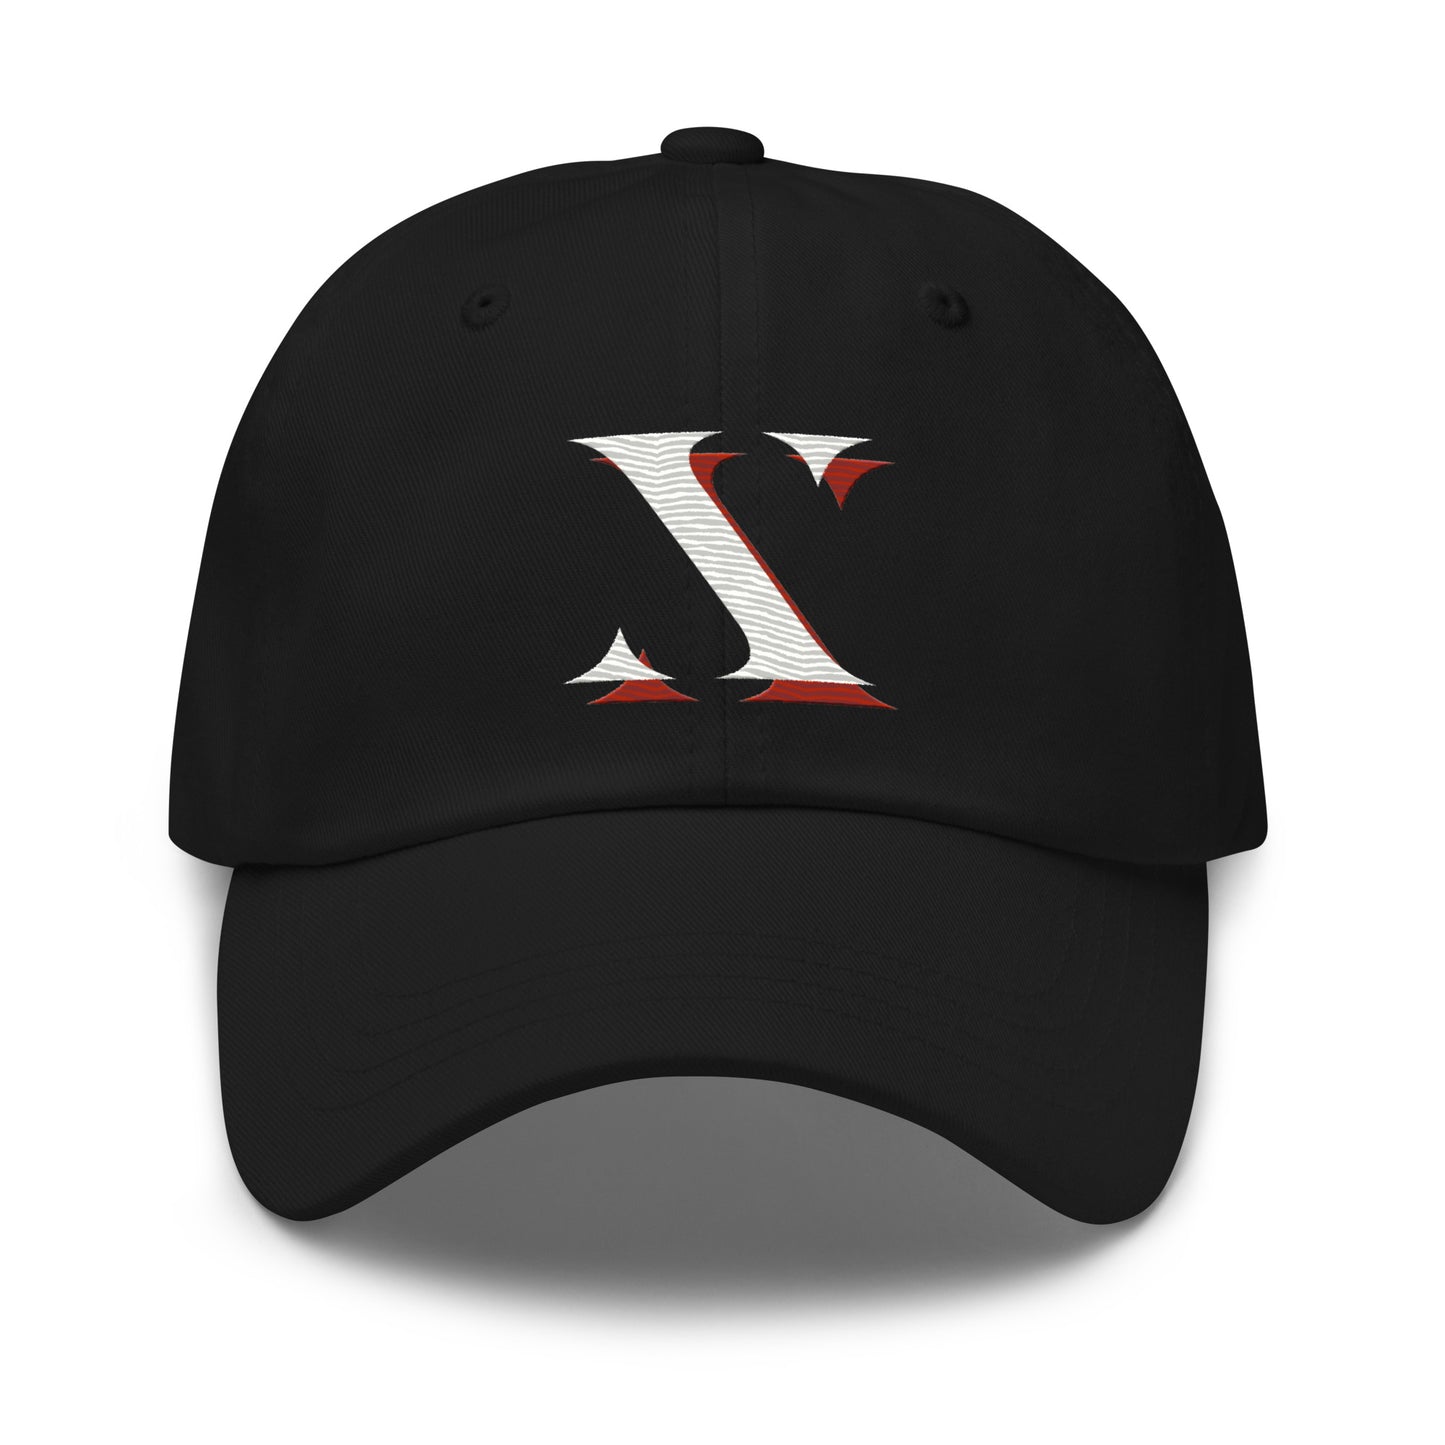 White "X" Prxphecy Dad Hat